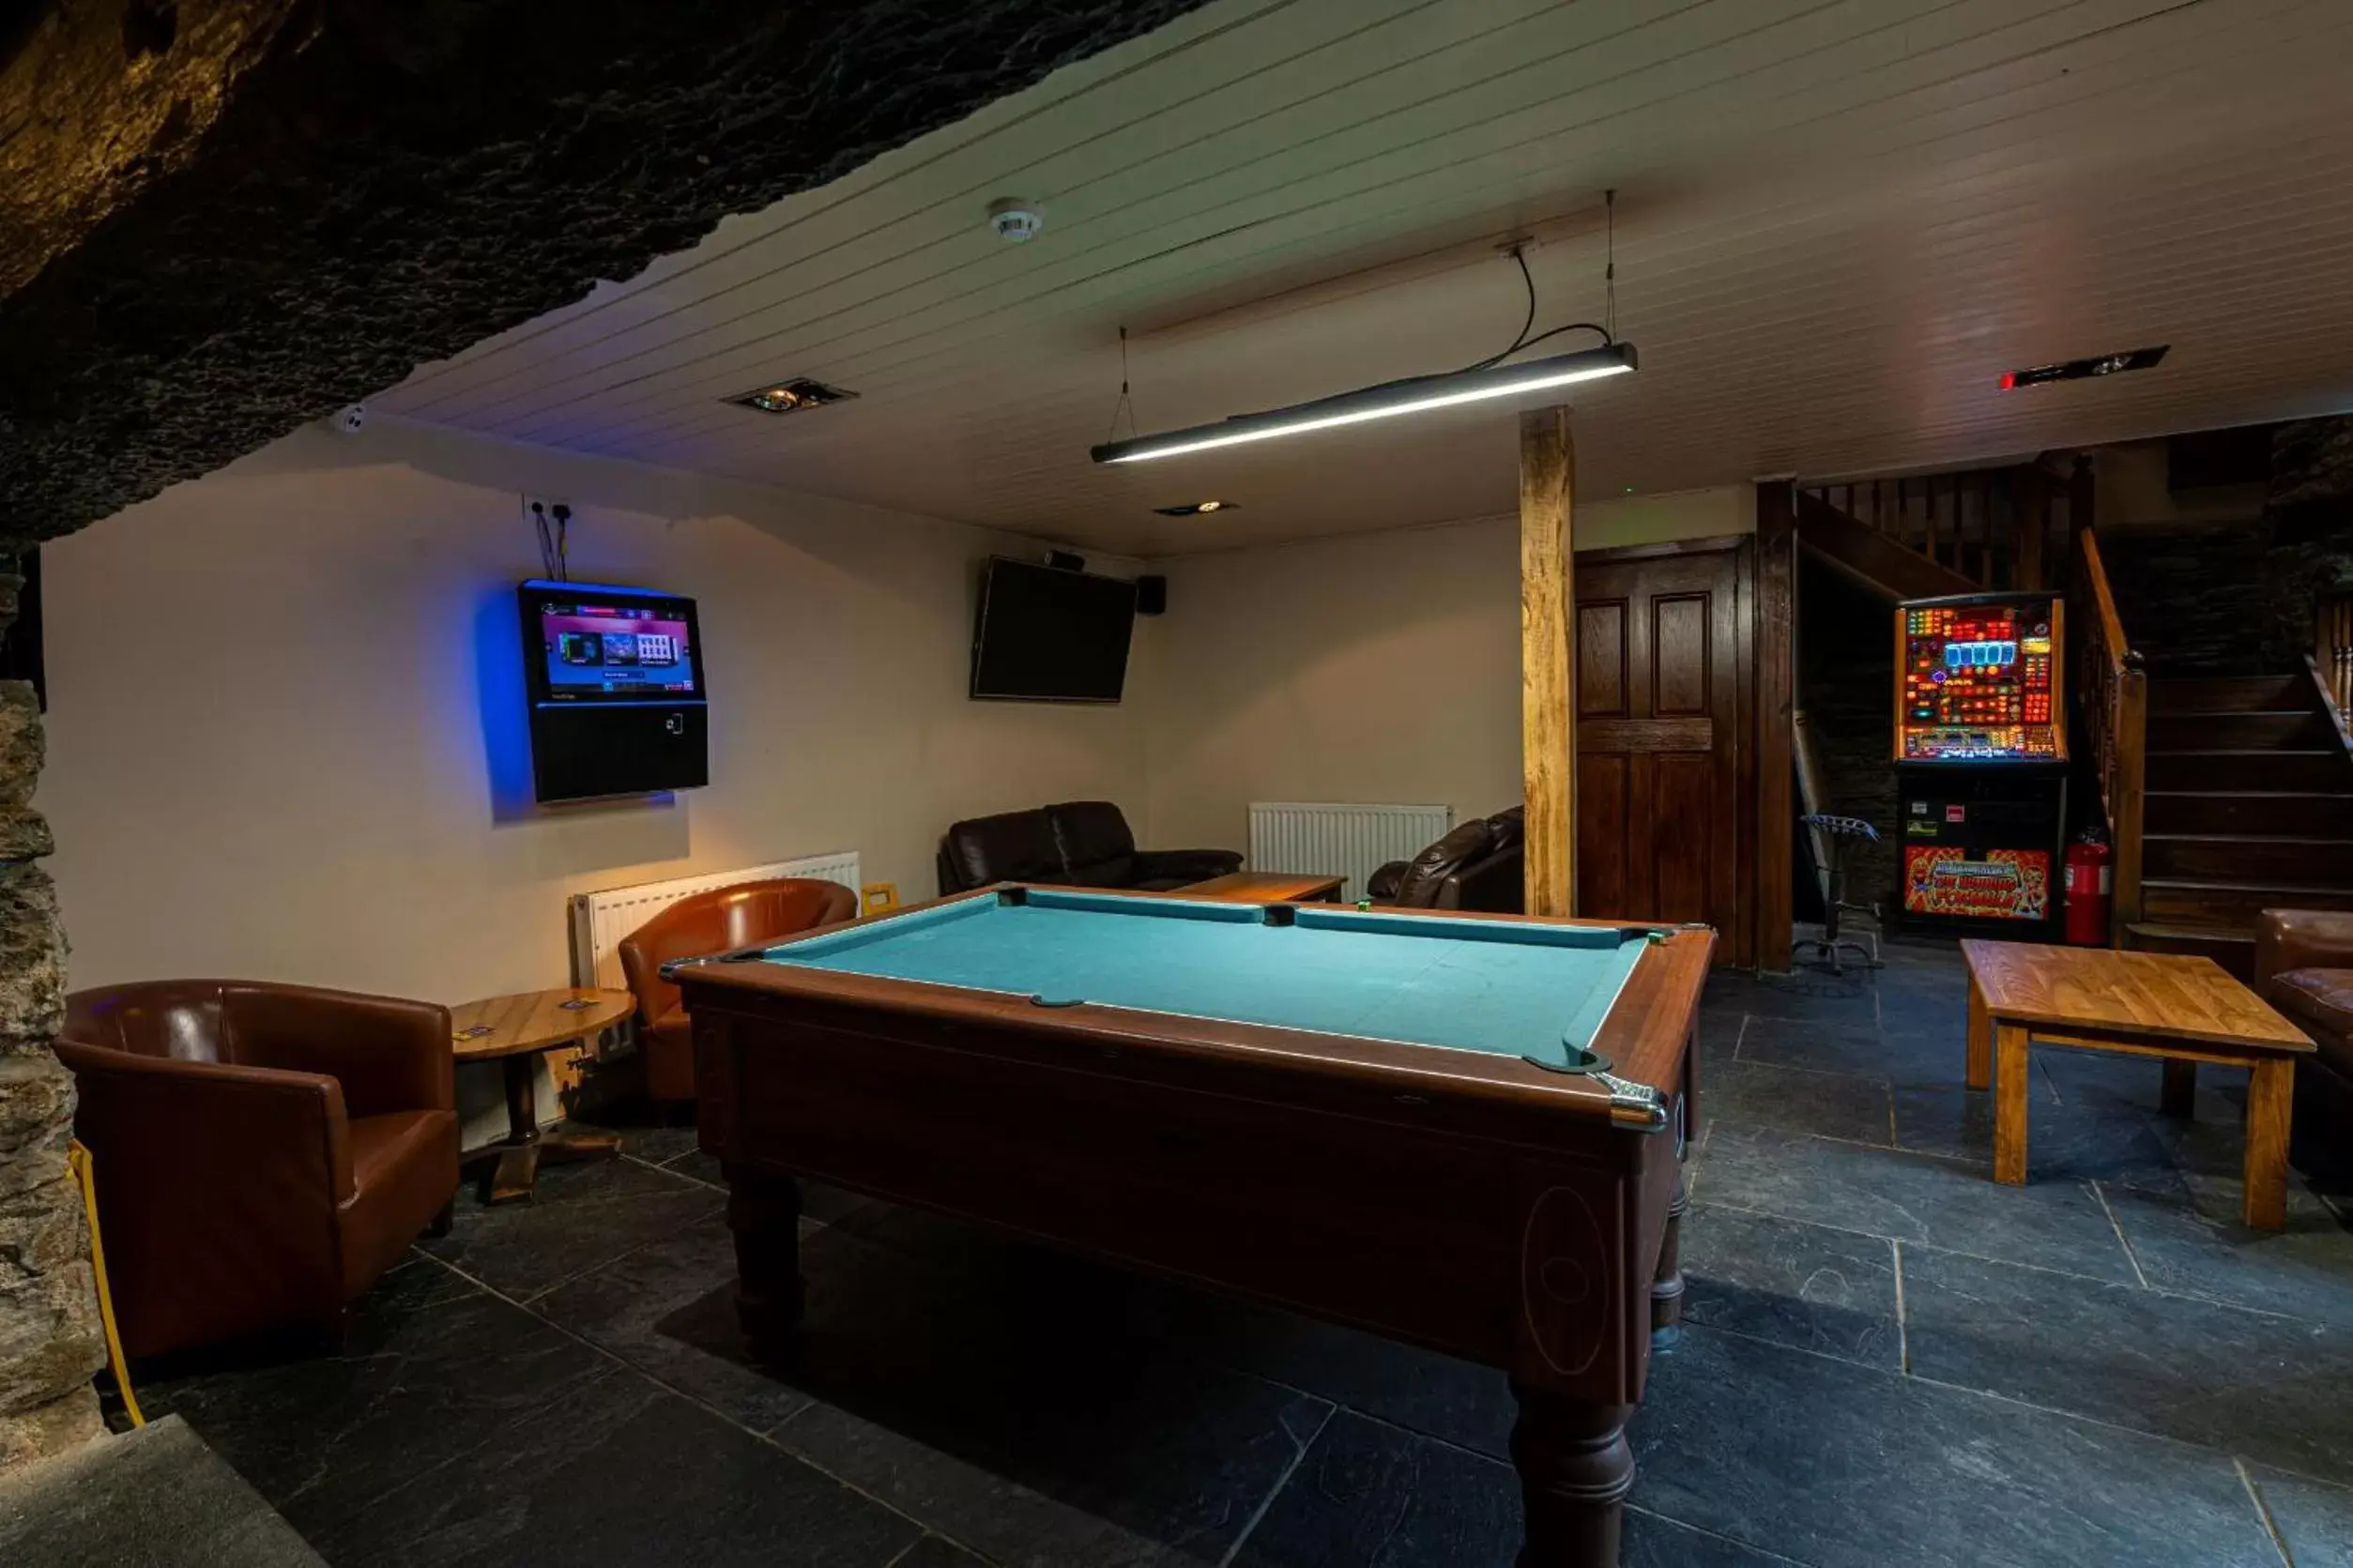 Game Room, Billiards in Grapes Hotel, Bar & Restaurant